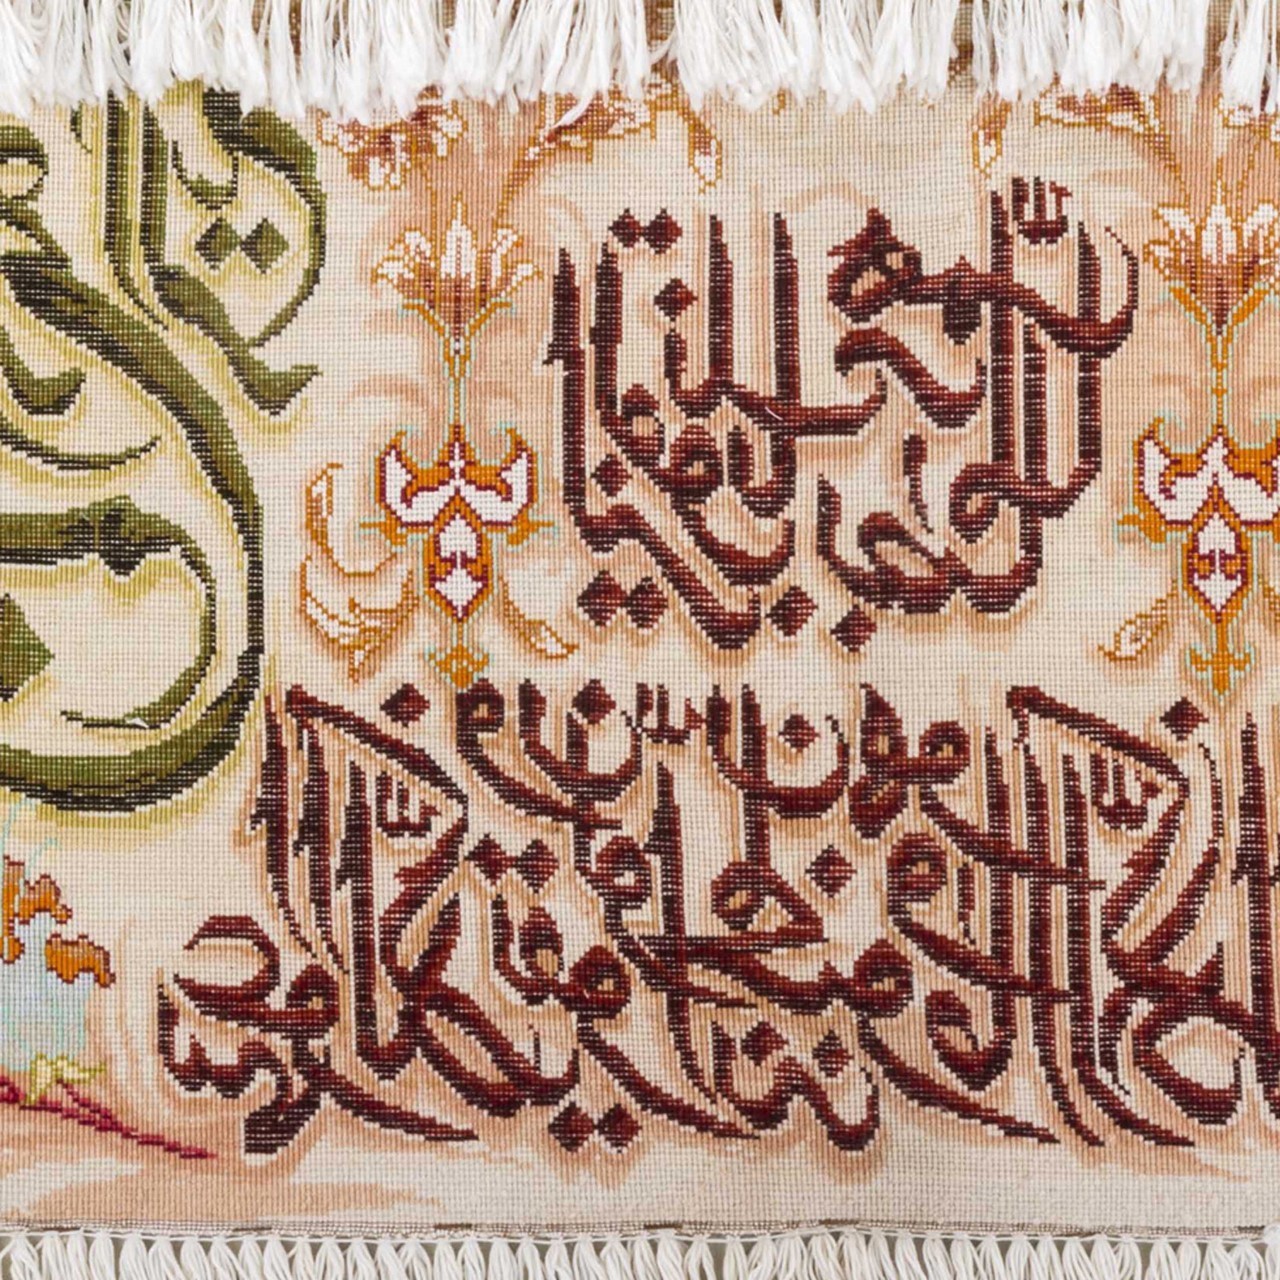 Pictorial Tabriz Carpet Ref : 901295